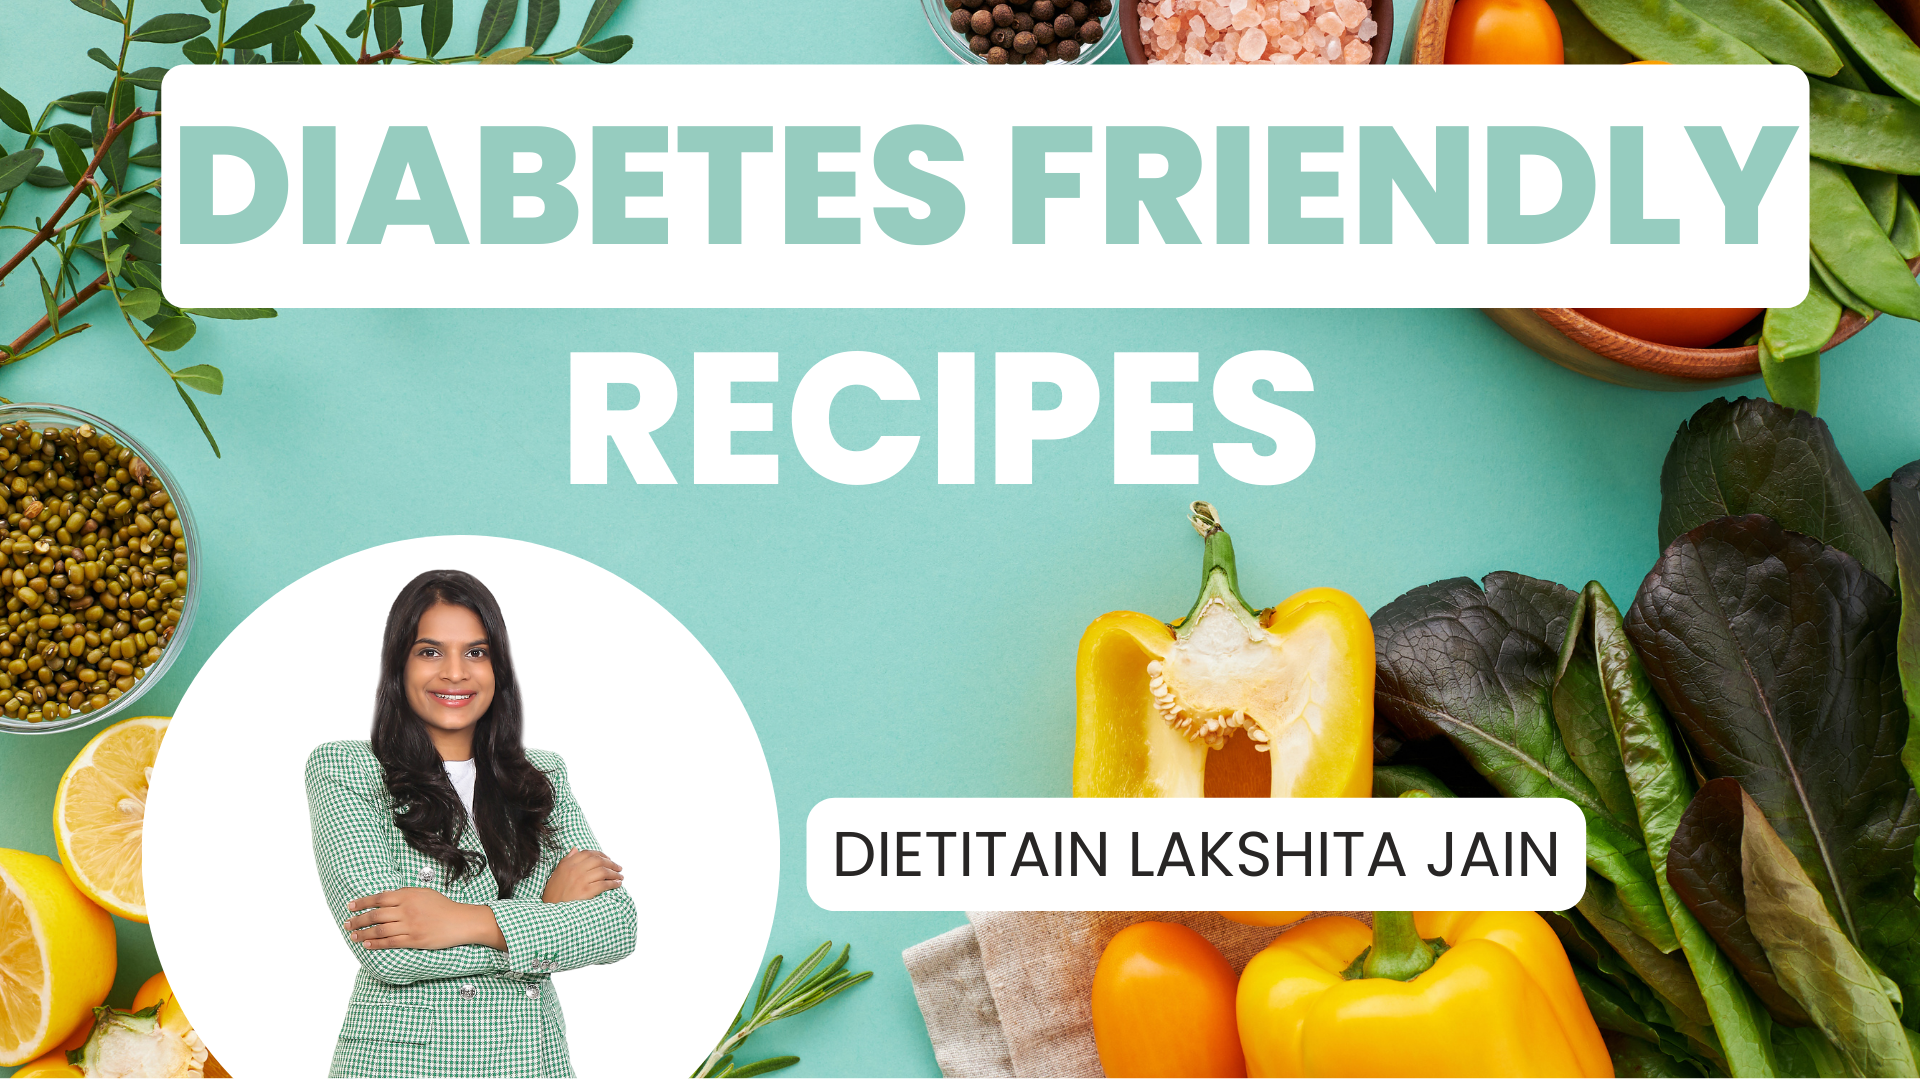 Diabetic Friendly recipe by Dietitian Lakshita Jain